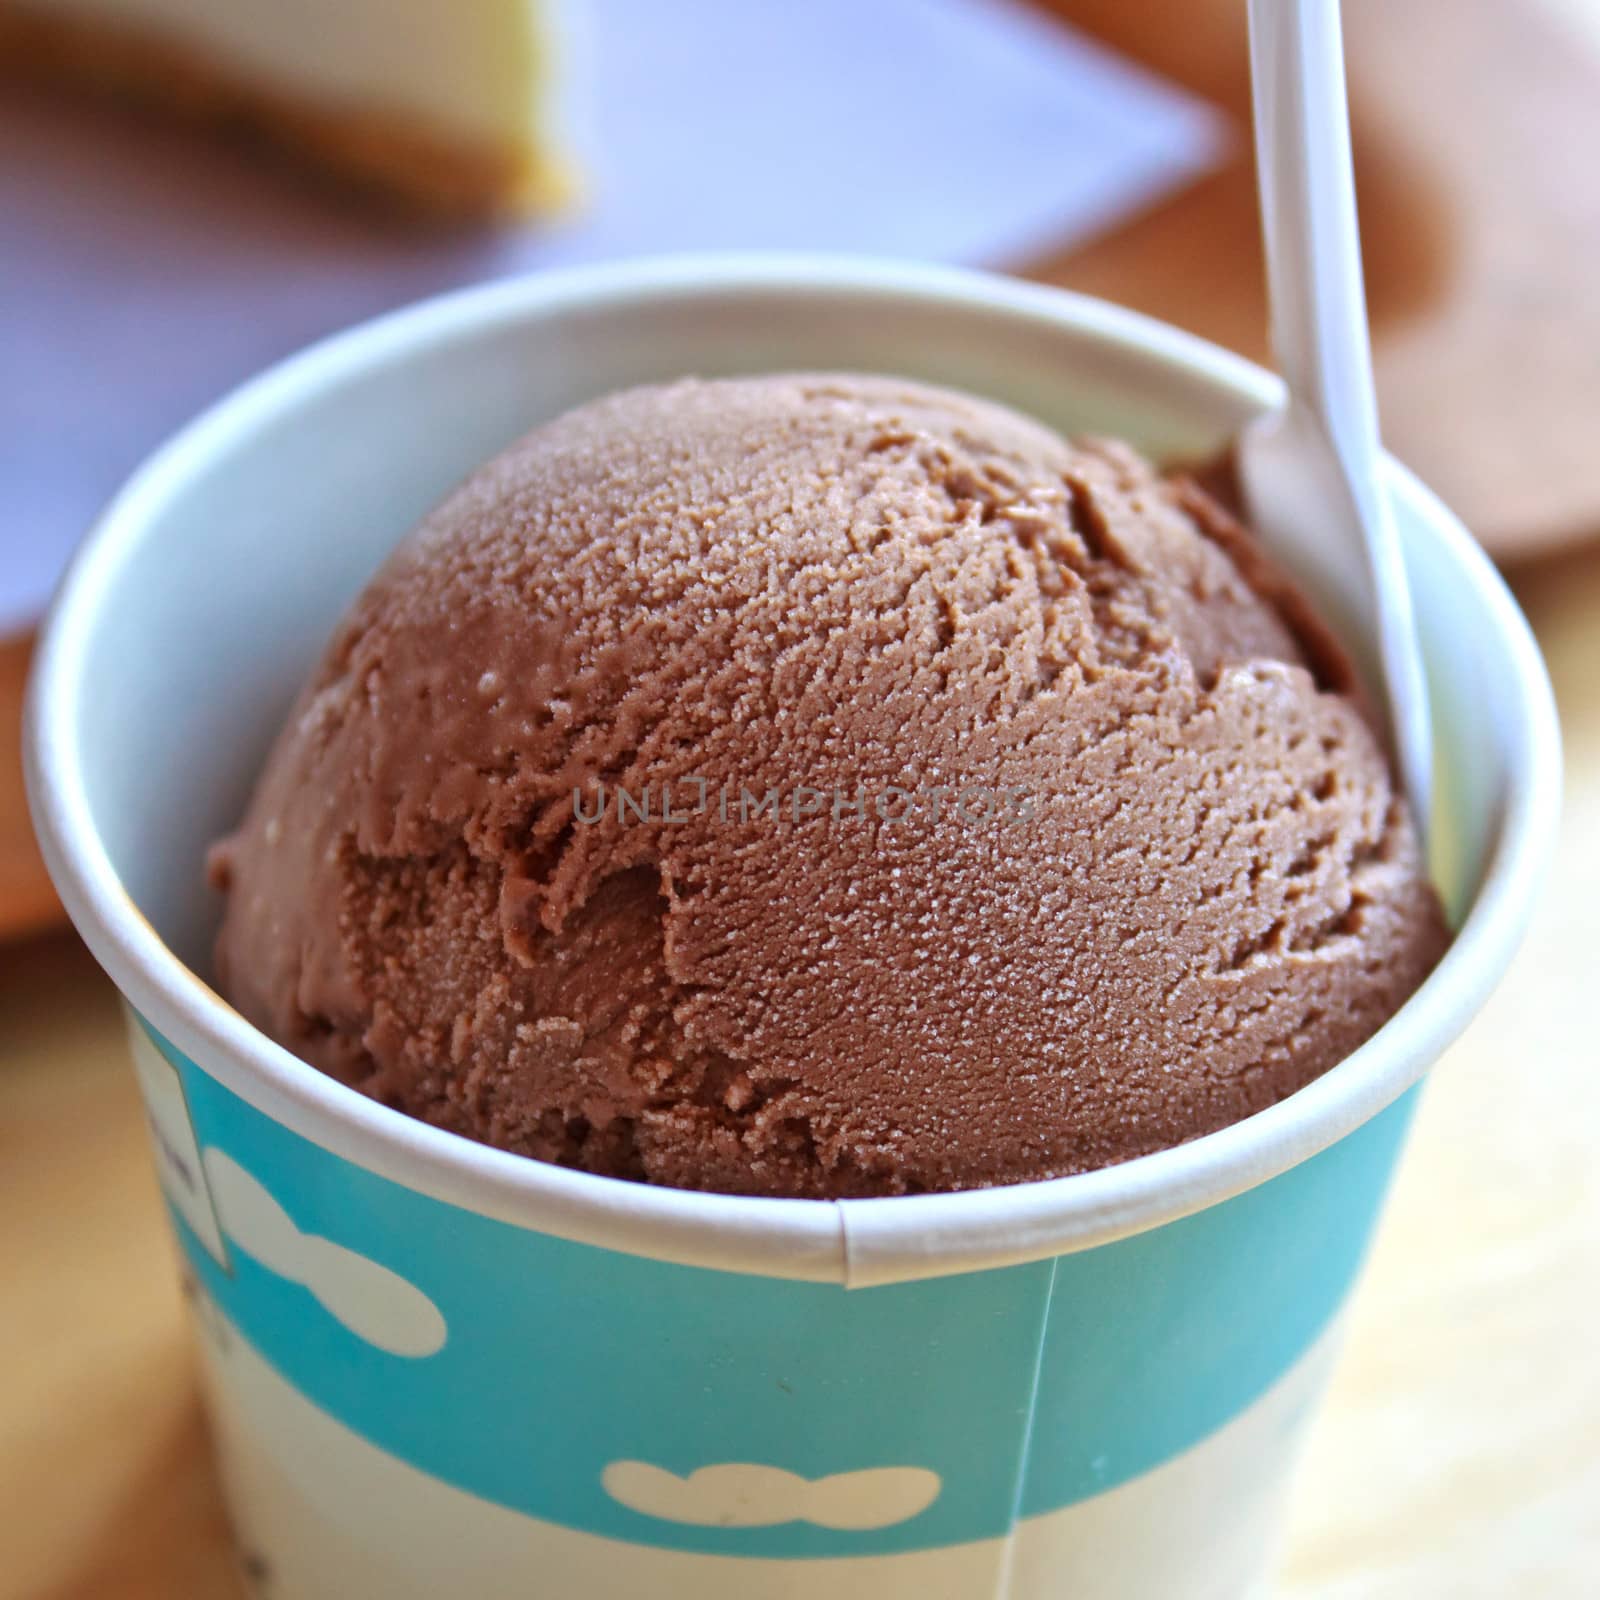 Chocolate ice cream scoop 3 by redthirteen